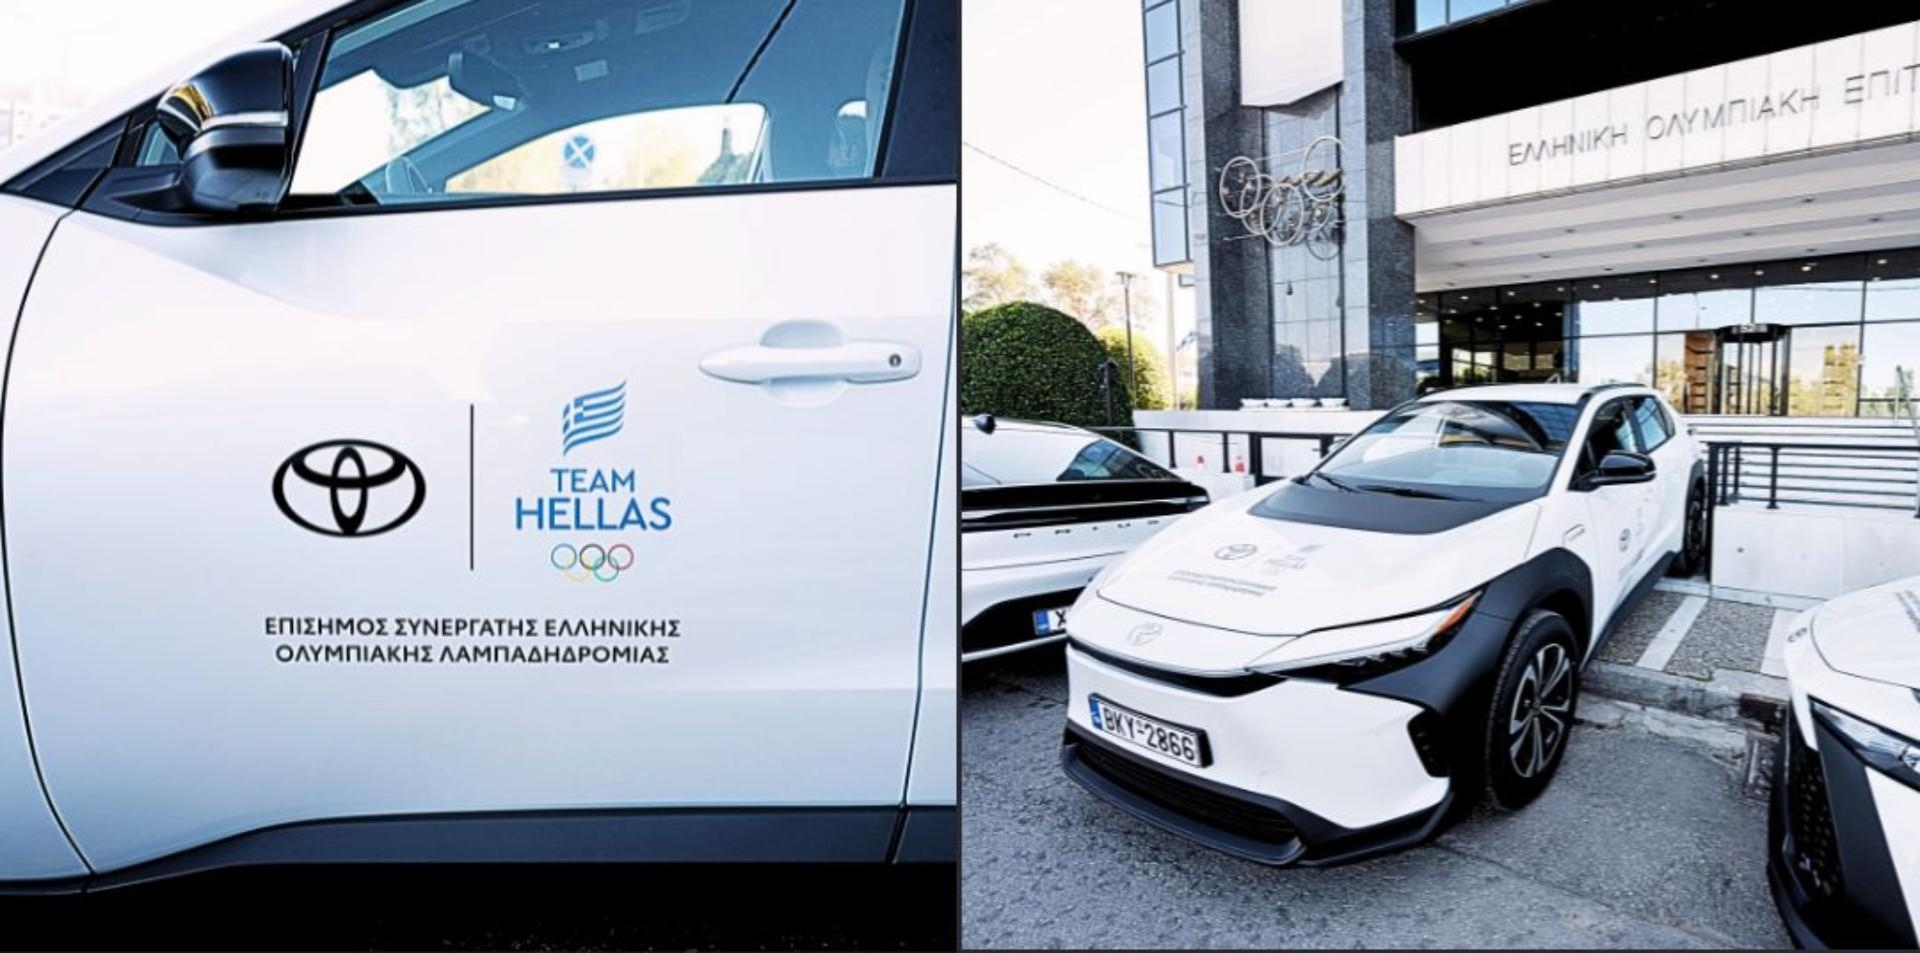 h toyota hellas παρέδωσε οχήματα στην ελληνική ολυμπιακή επιτροπή